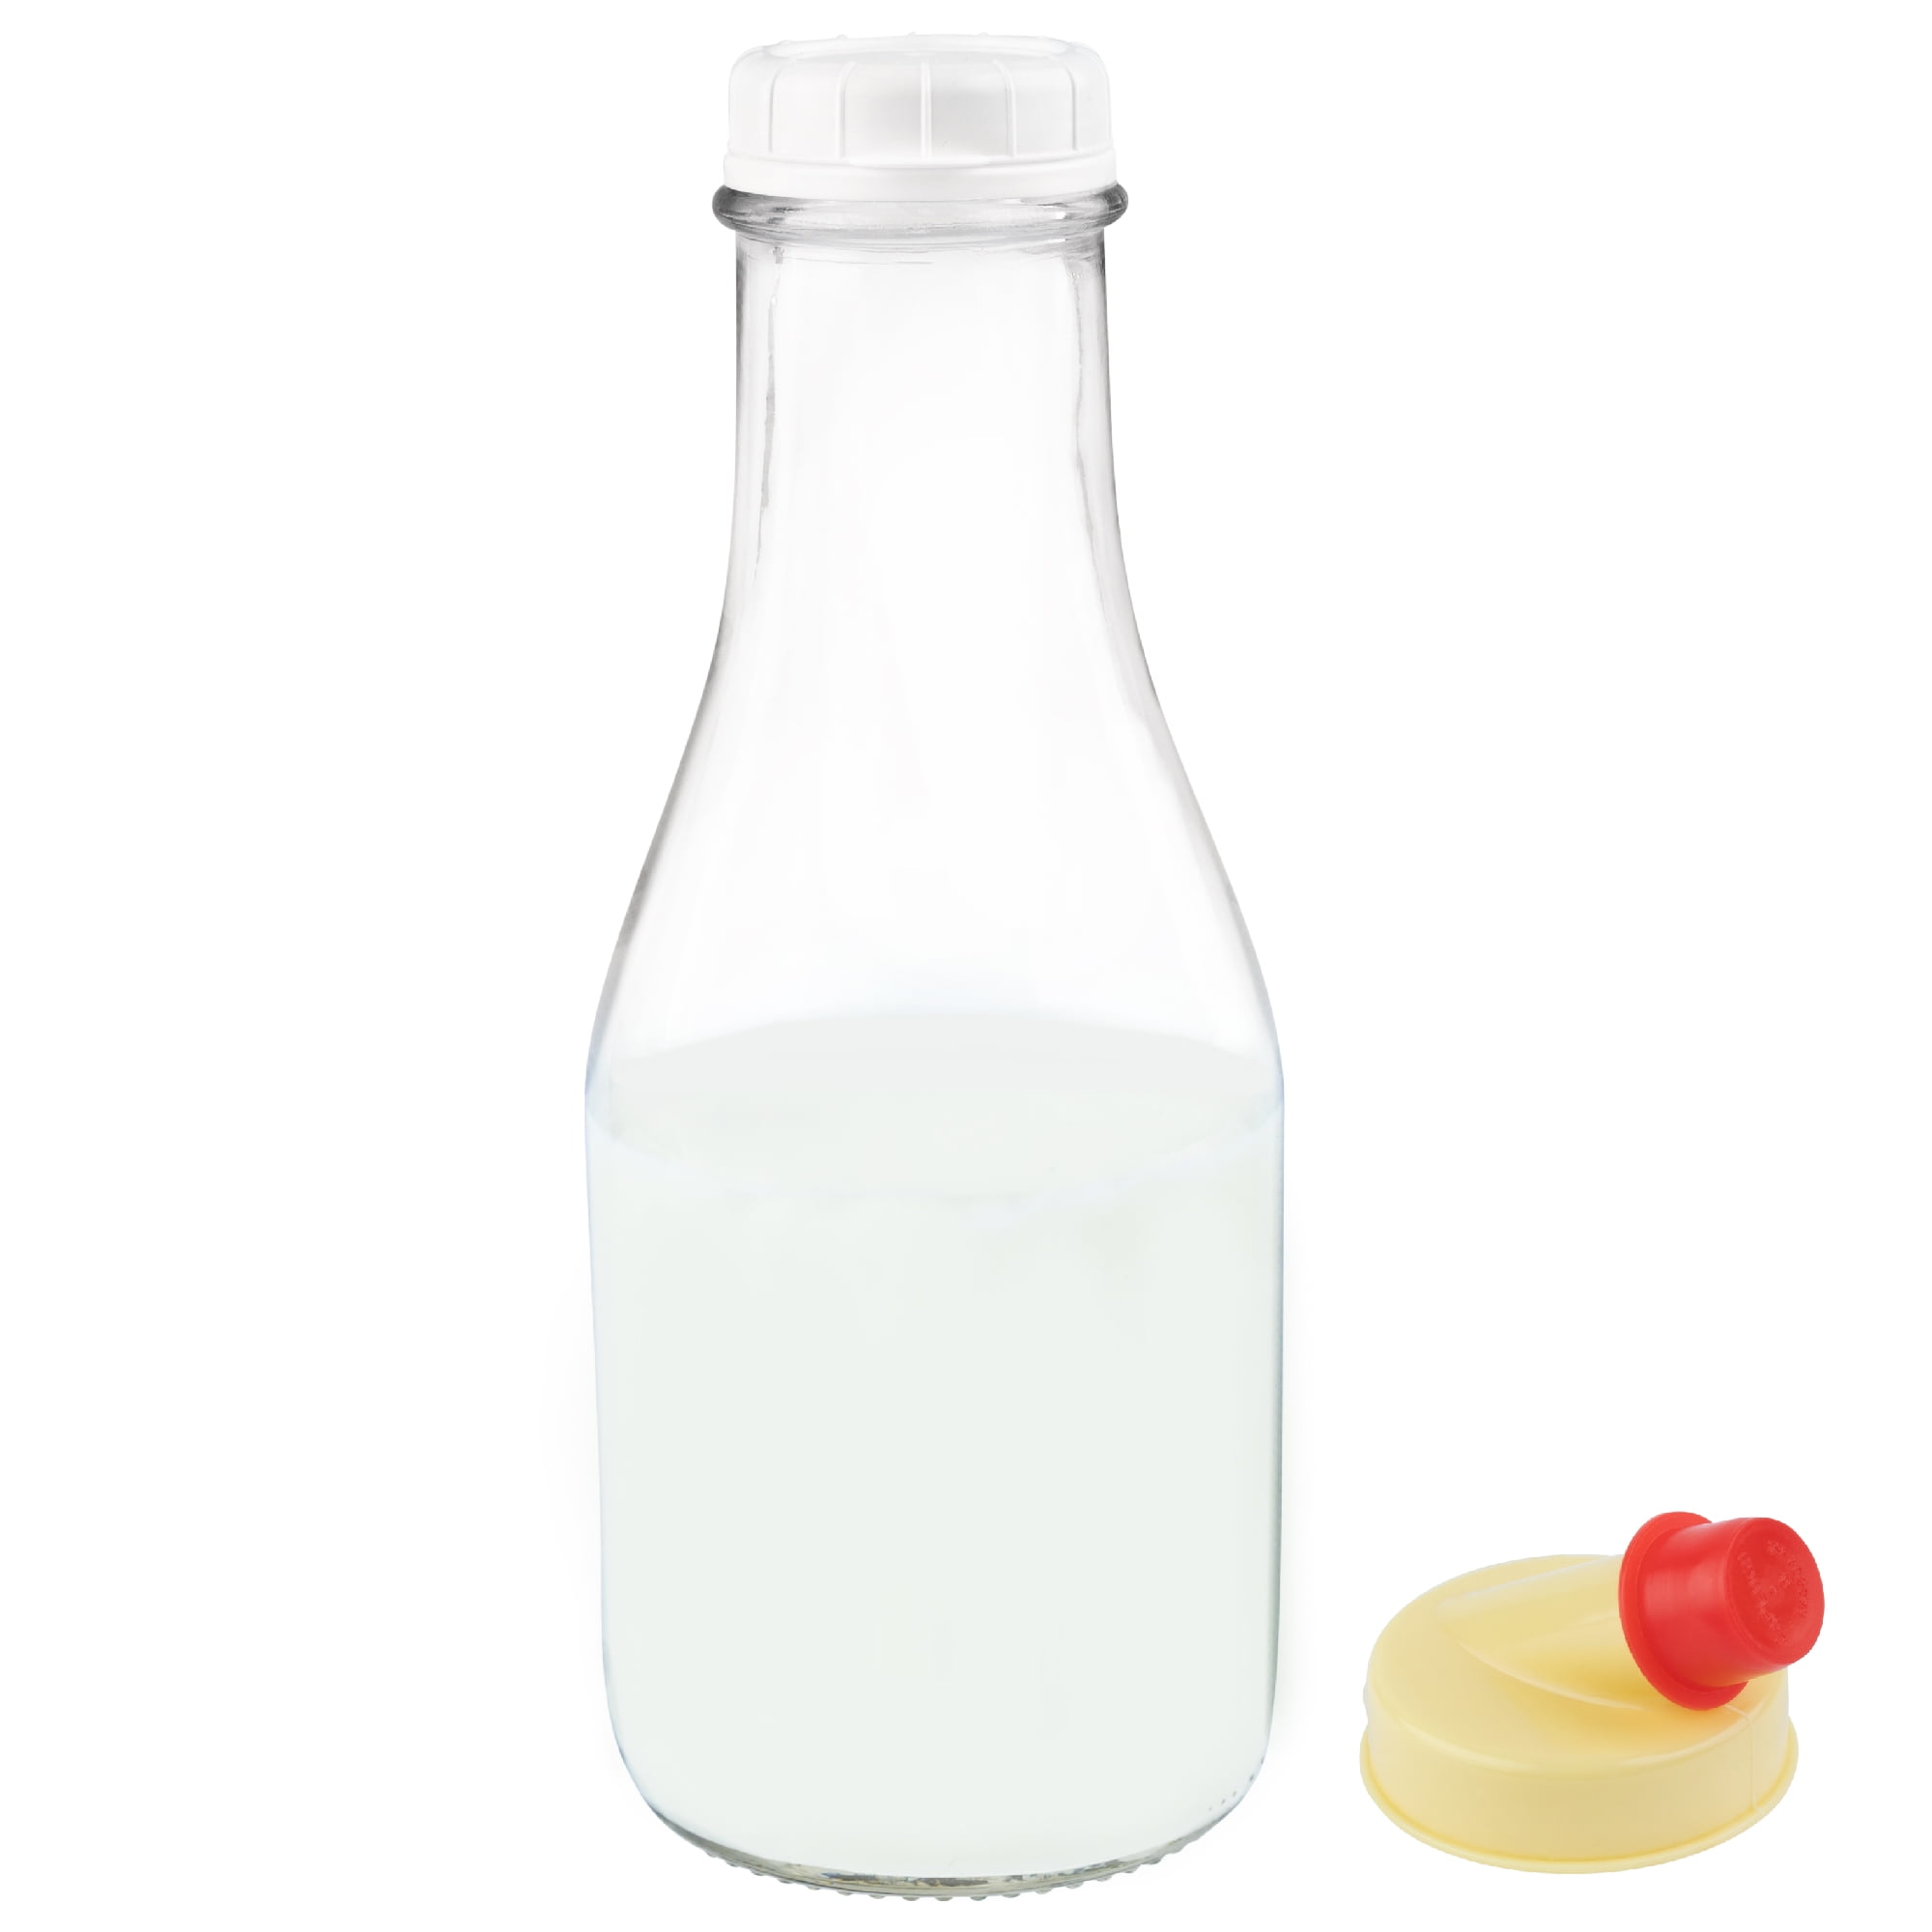 Buy 500ml Glass Milk Bottles, Pack of 12, Air tight lids. Ideal